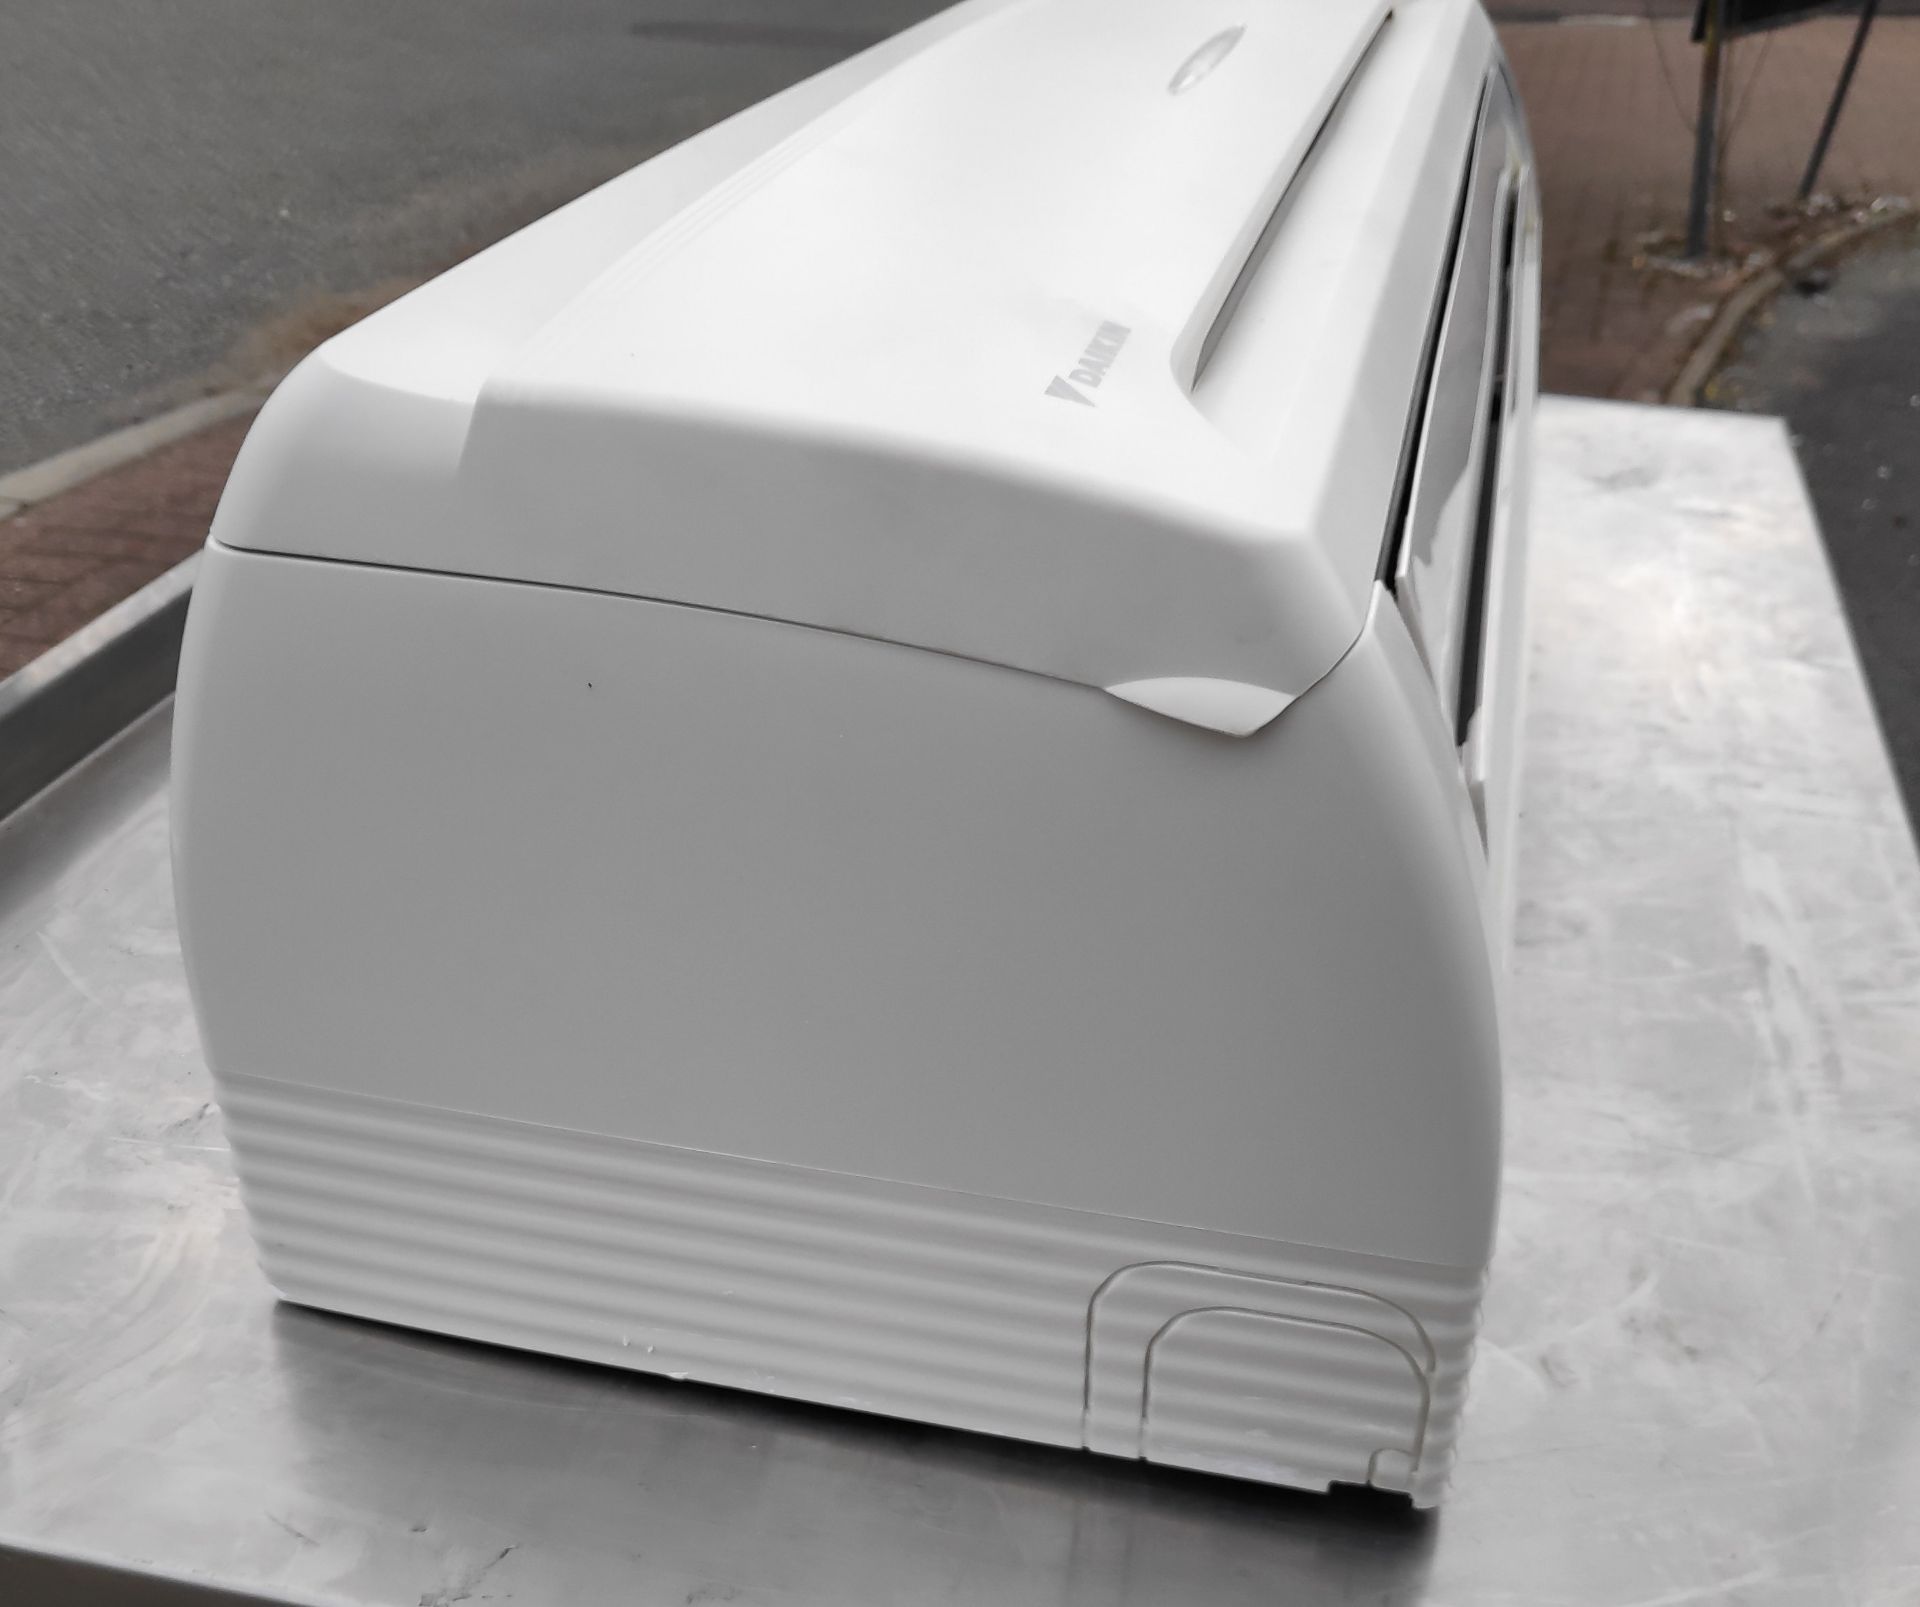 1 x Daikin Wall Mounted Air Conditioner Indoor Unit - Model FXAQ32PAV1 - JMCS117 - CL723 - - Image 6 of 8